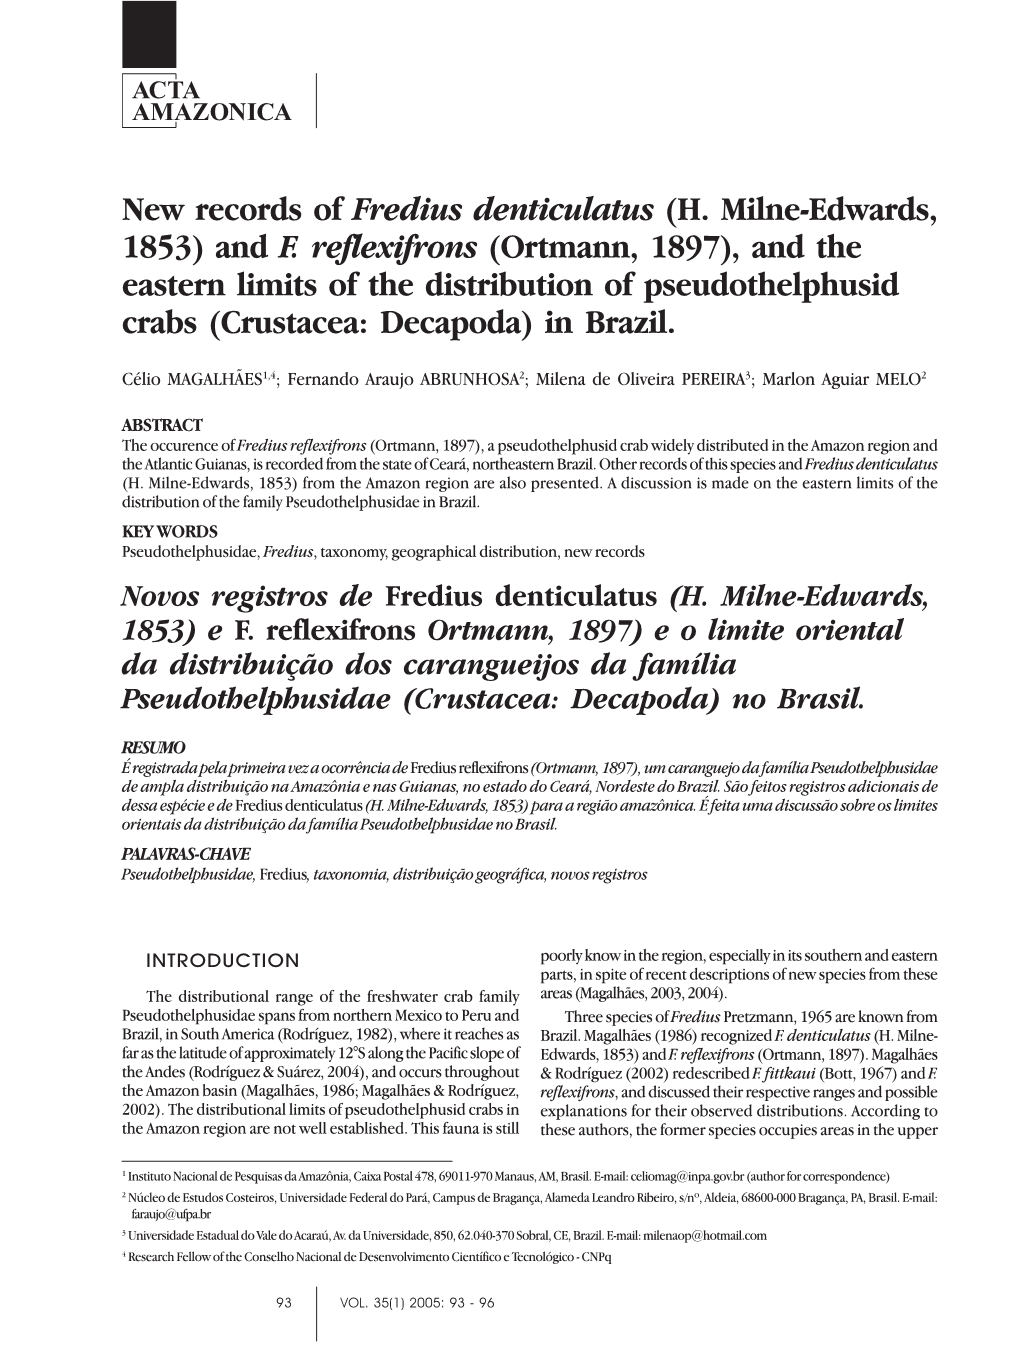 New Records of Fredius Denticulatus (H. Milne-Edwards, 1853) and F